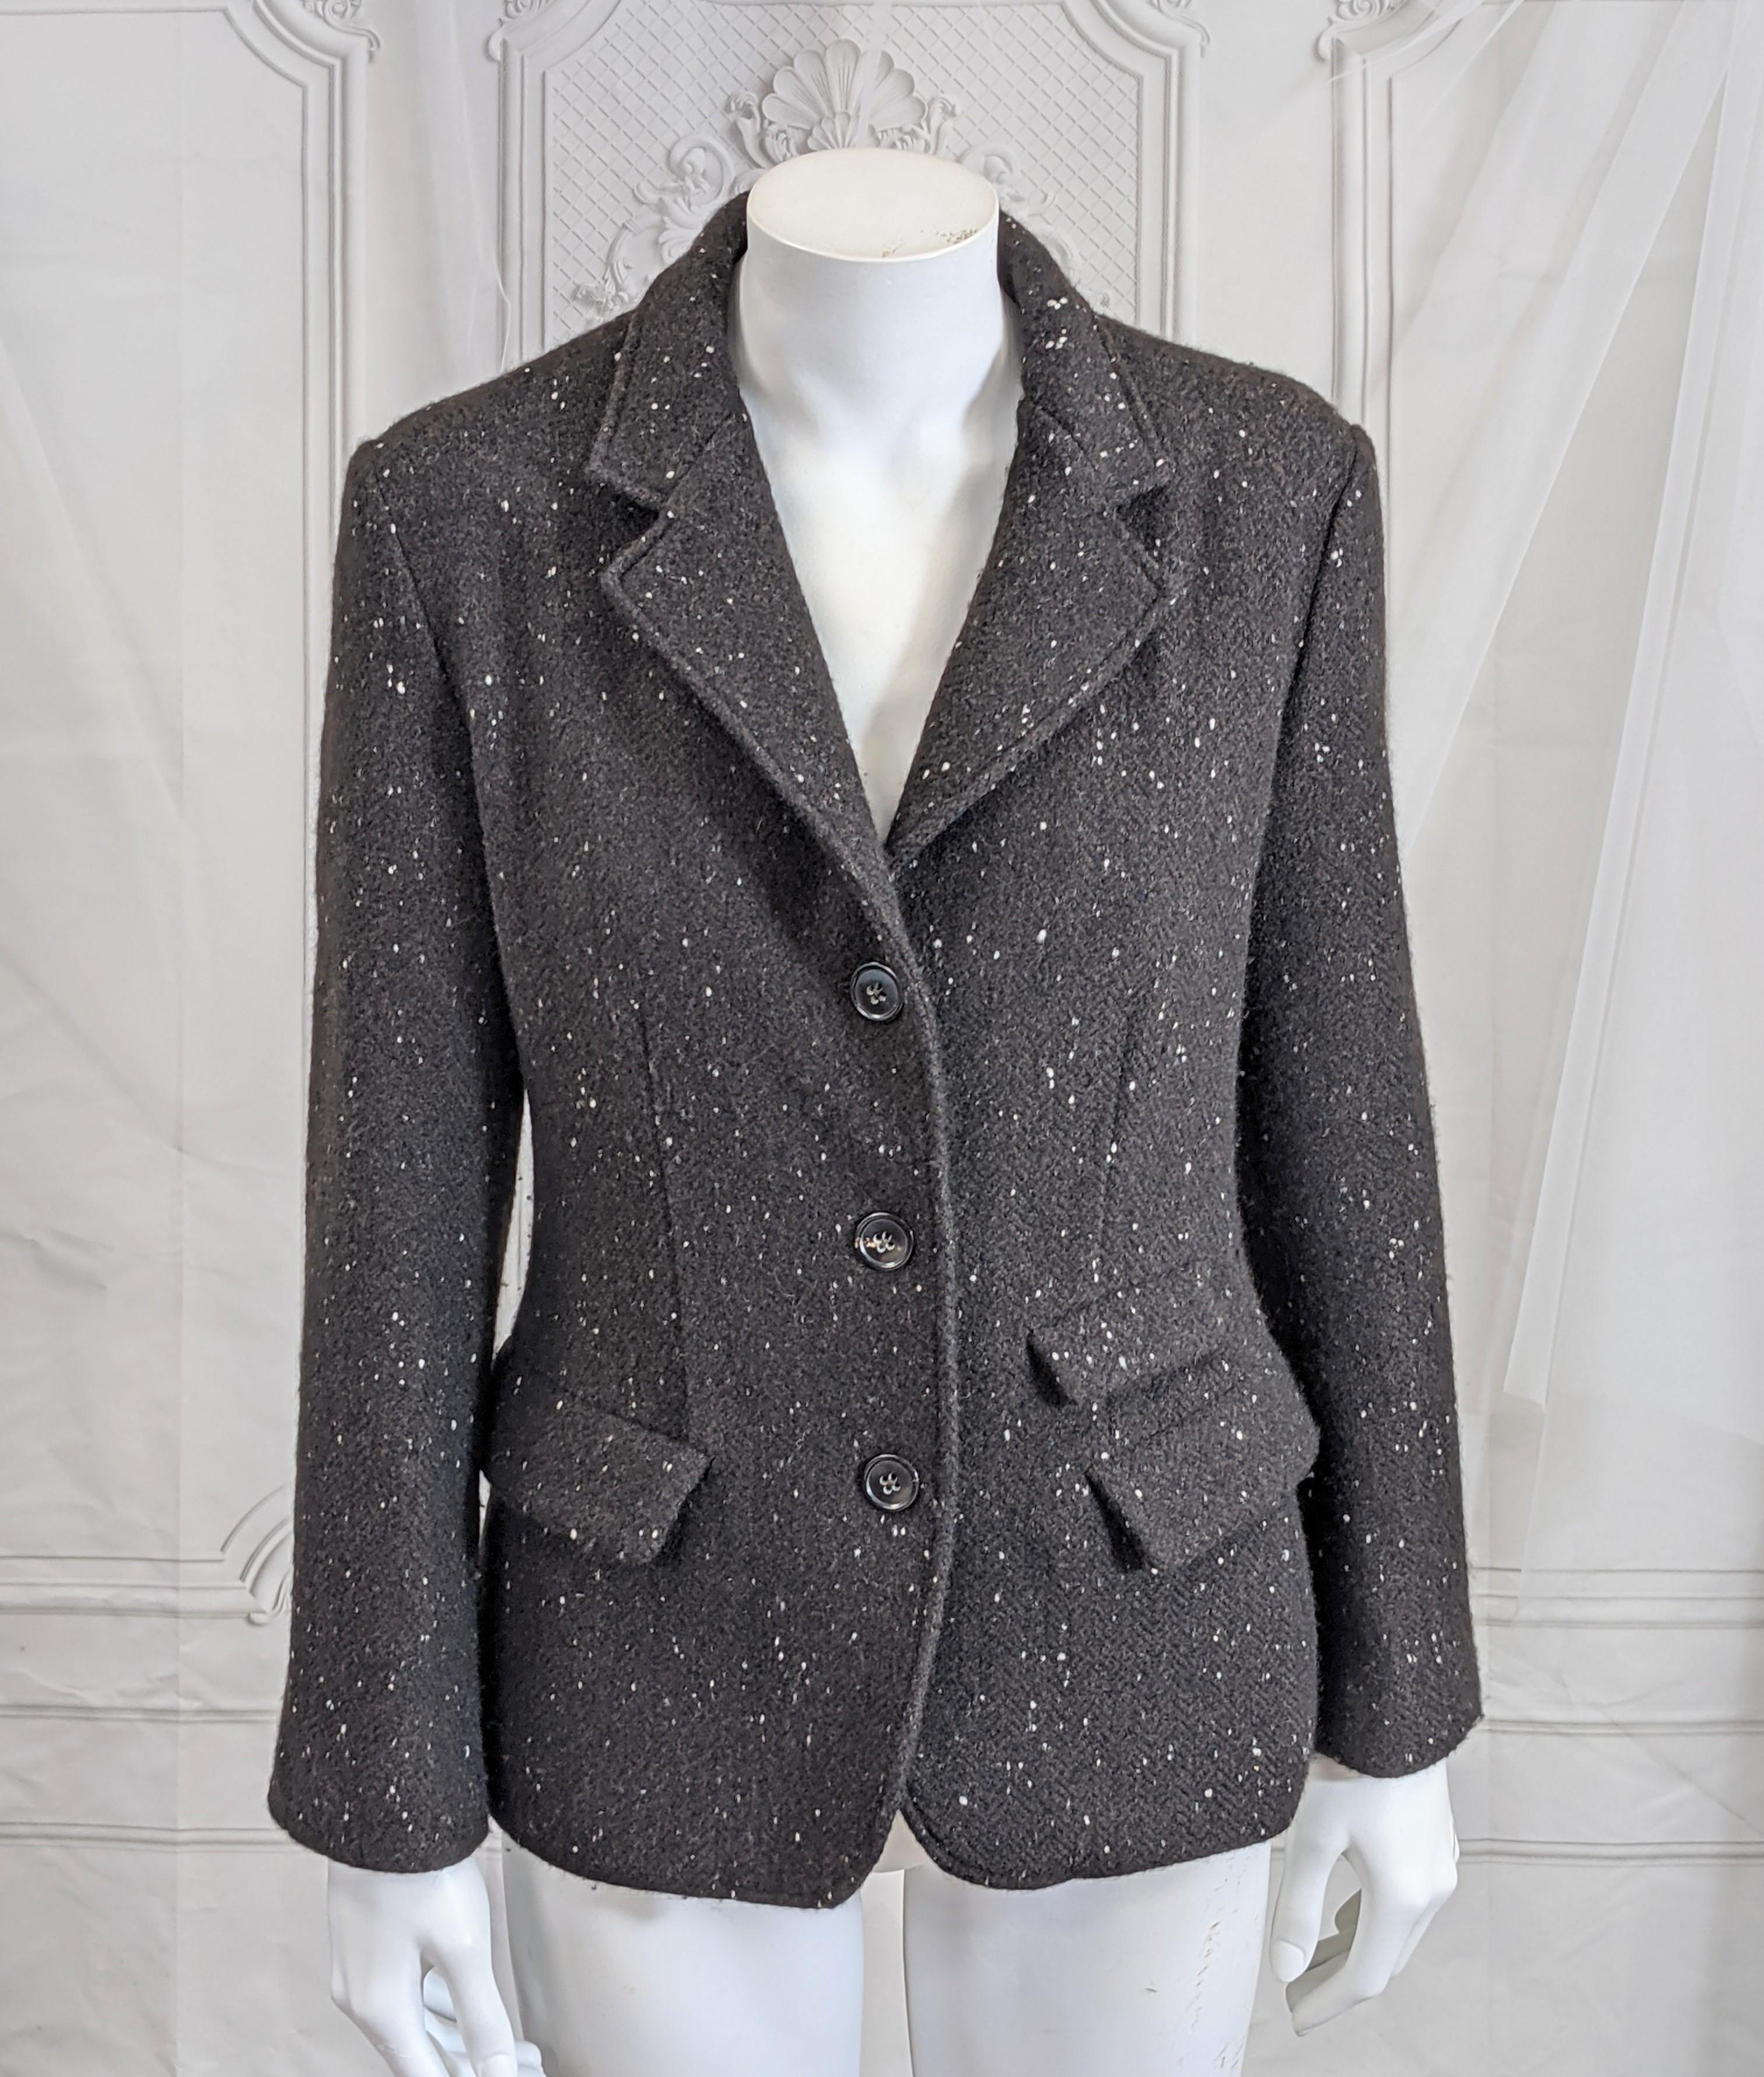 Jil Sander Cashmere Melange Tweed Blazer of Deep brown with white flecks. Short cropped classic cut, fully lined. 1990's.  
Size 34 Vintage. 